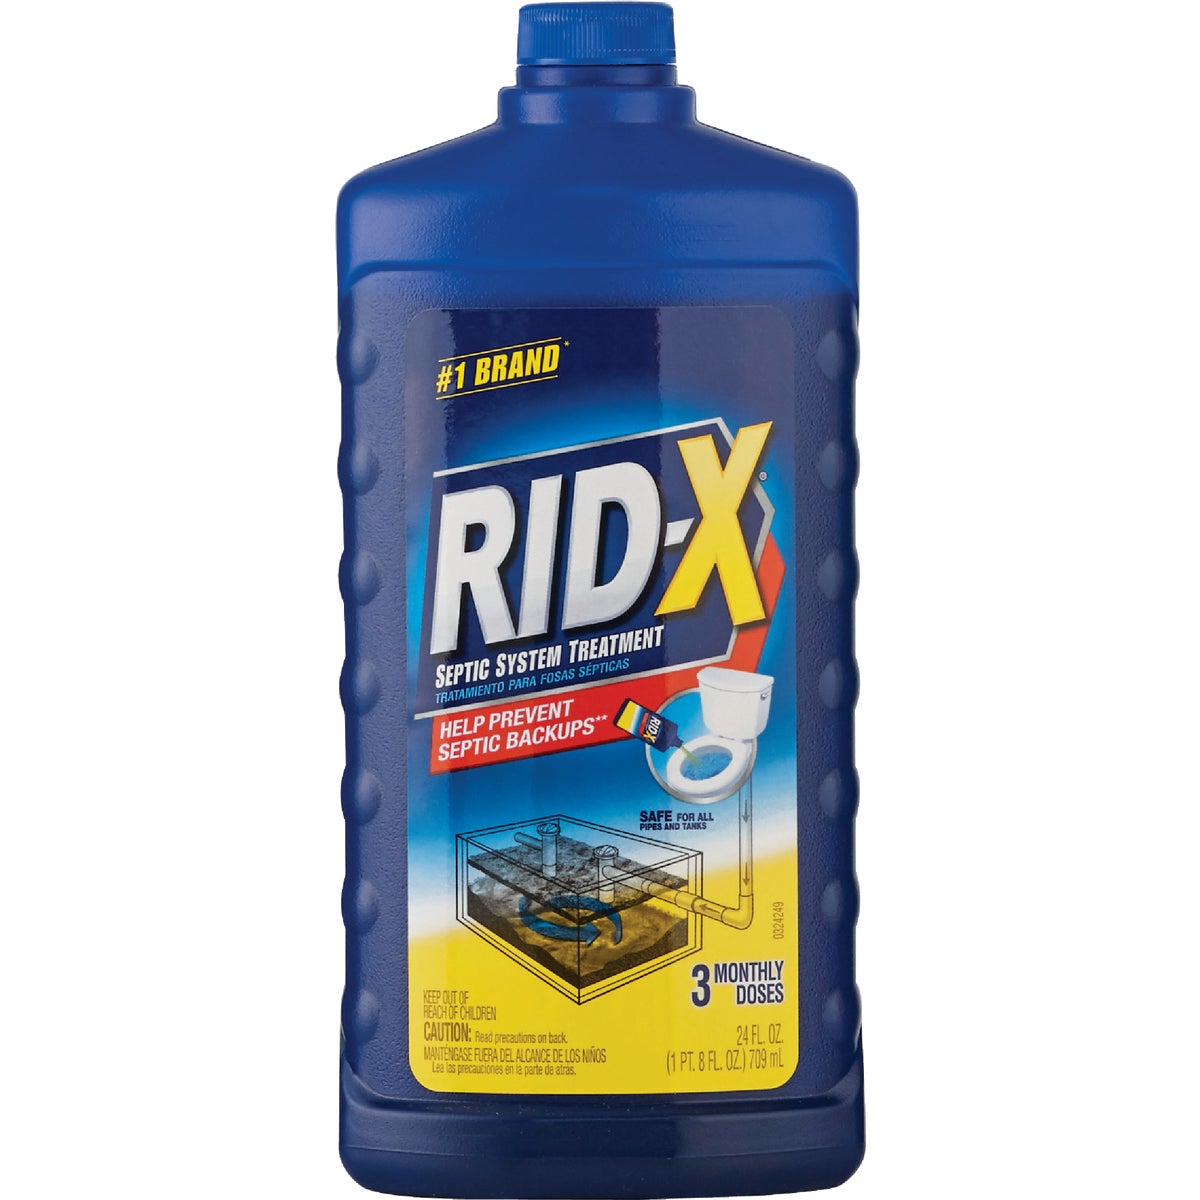 Item 447715, Rid-X Treatment, Professional septic system additive.